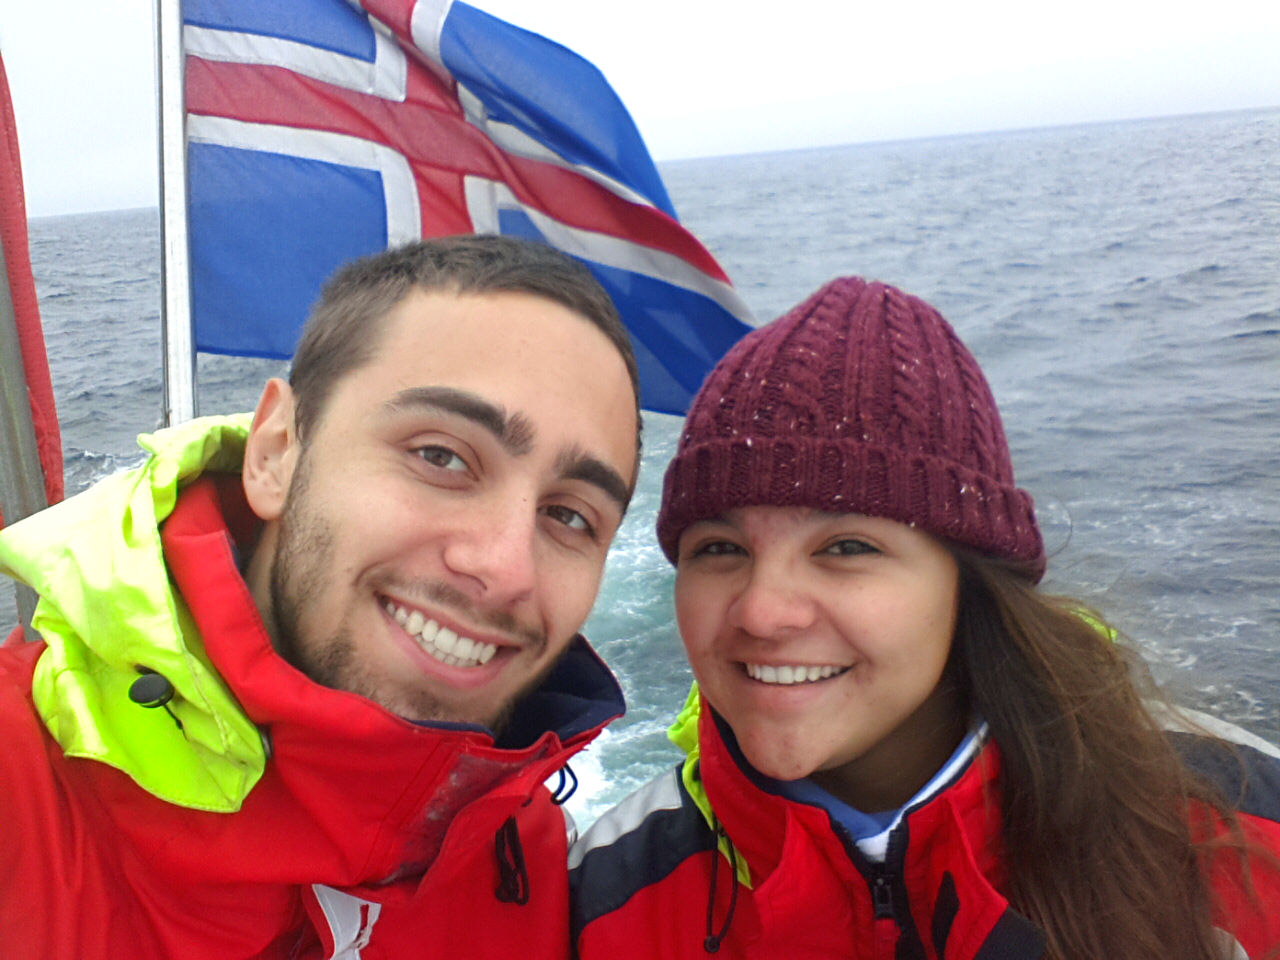 passeio de baleias, bandeira da islândia